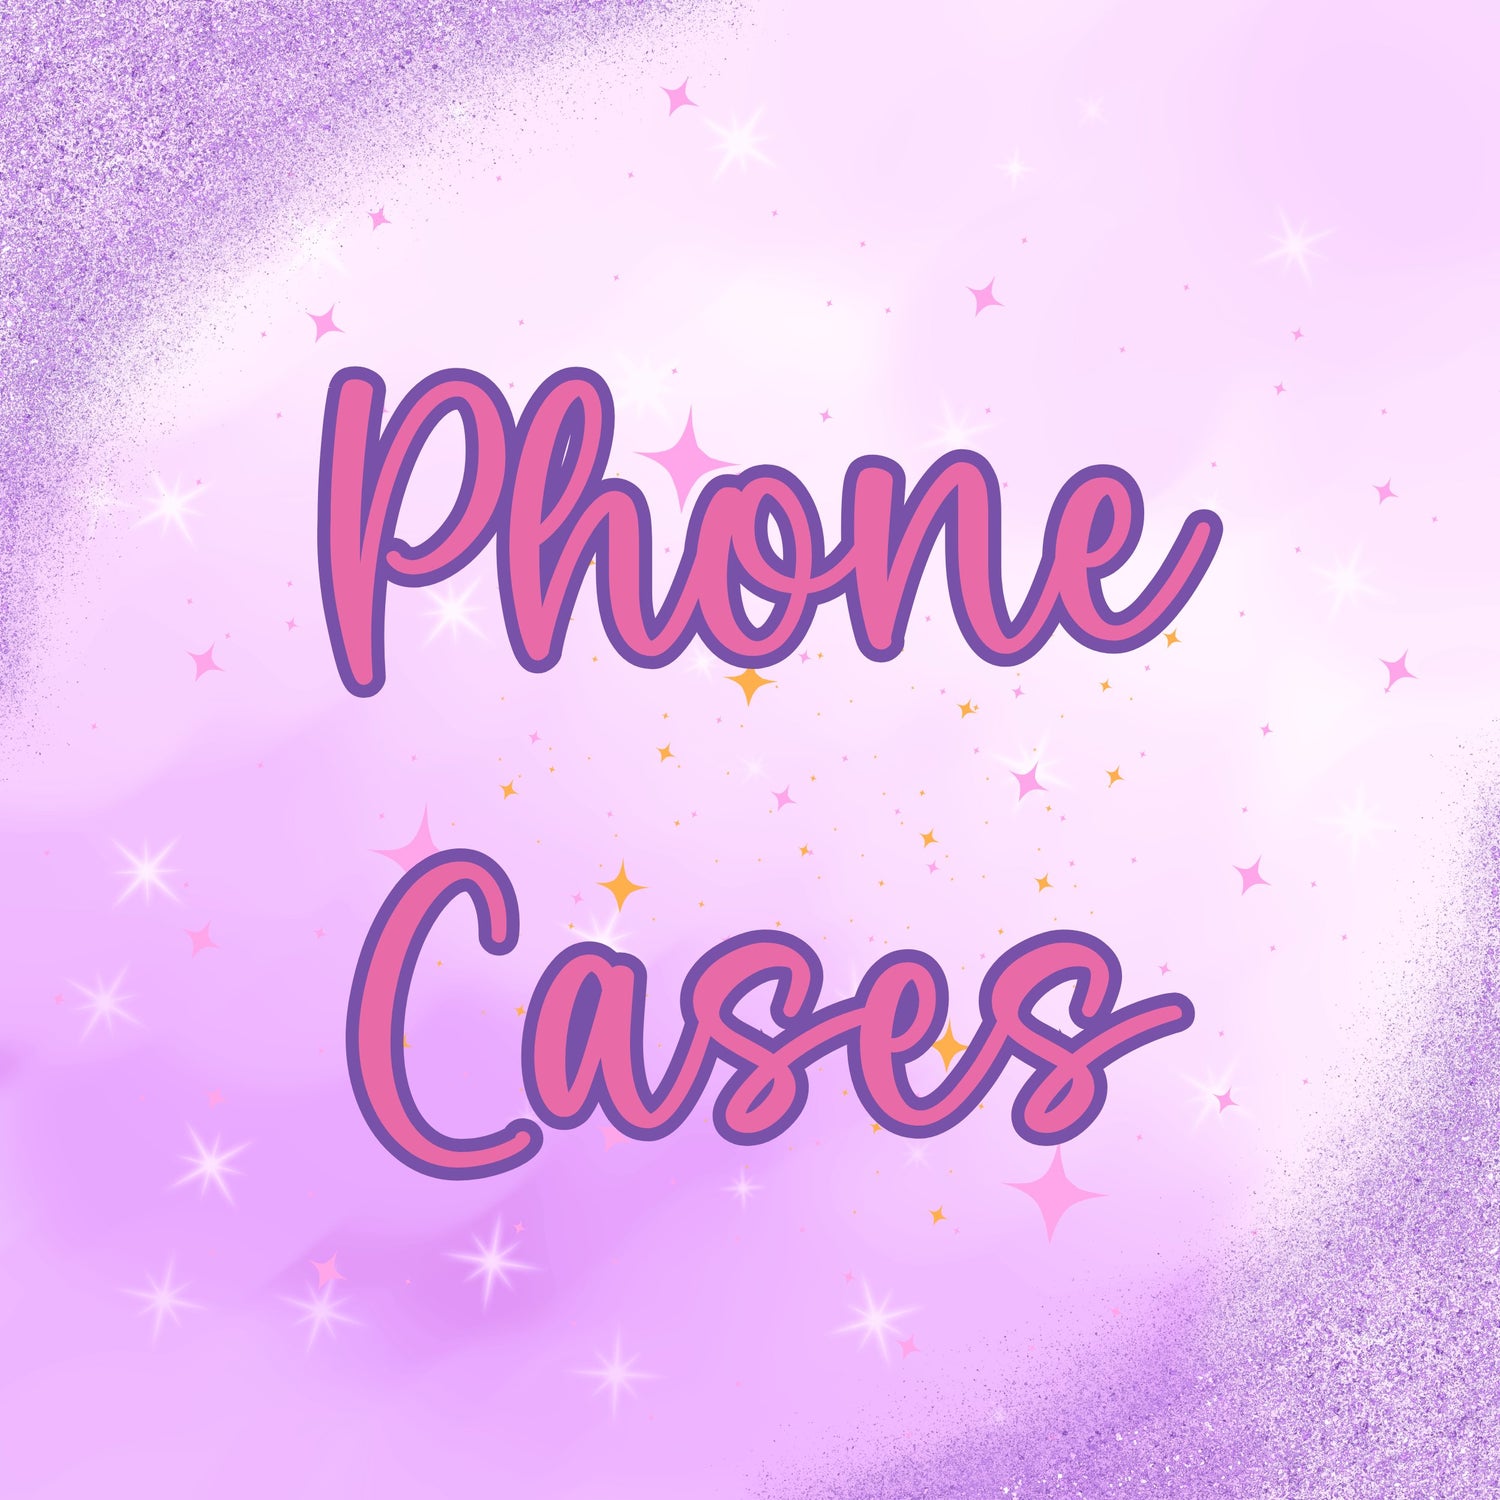 Phone Cases